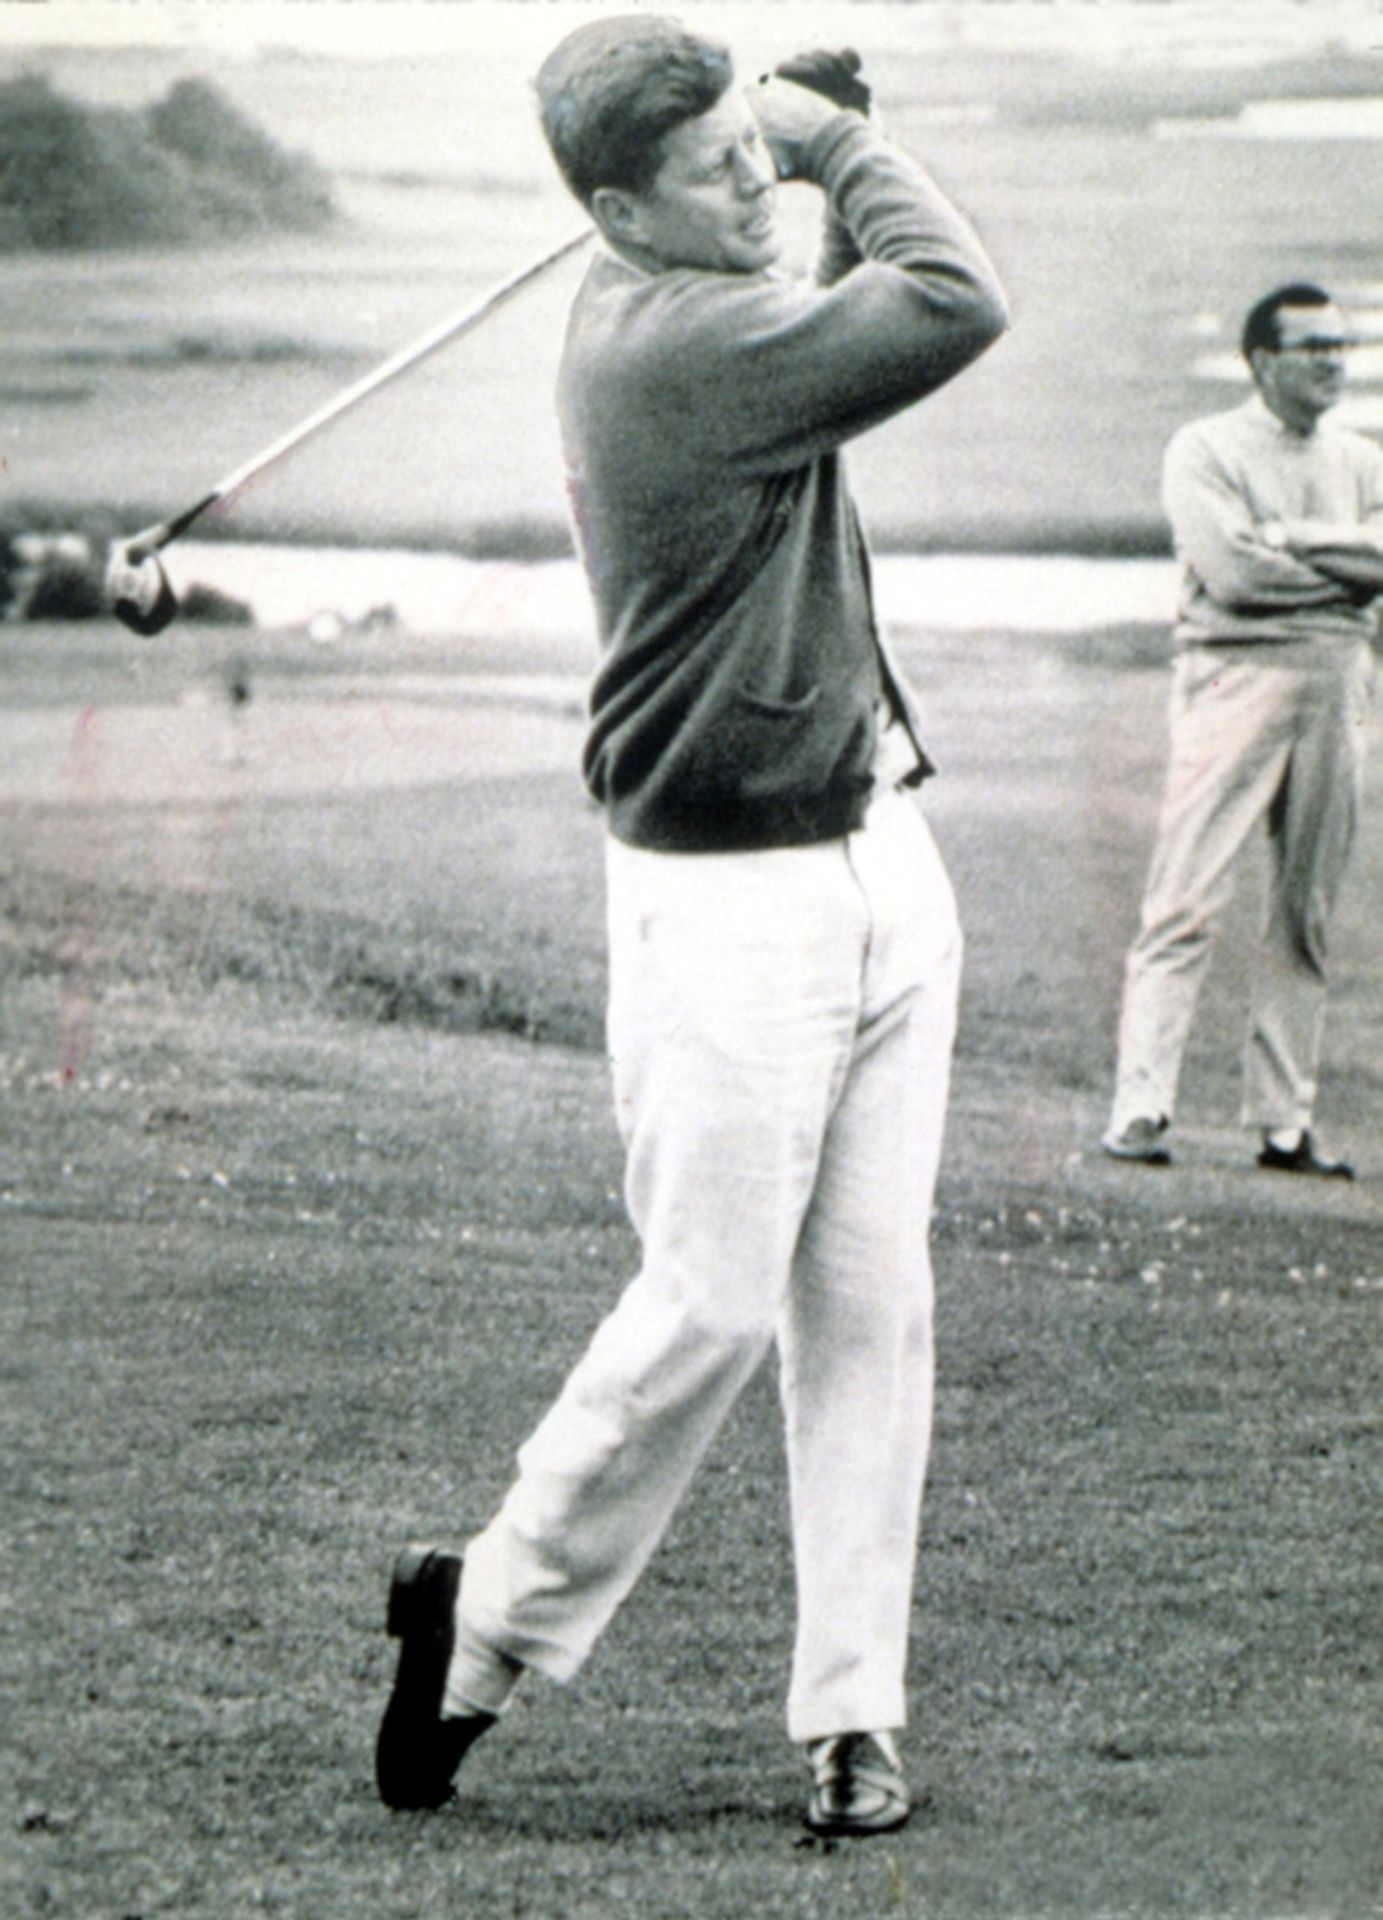 John F. Kennedy "Golfing" Photo Print